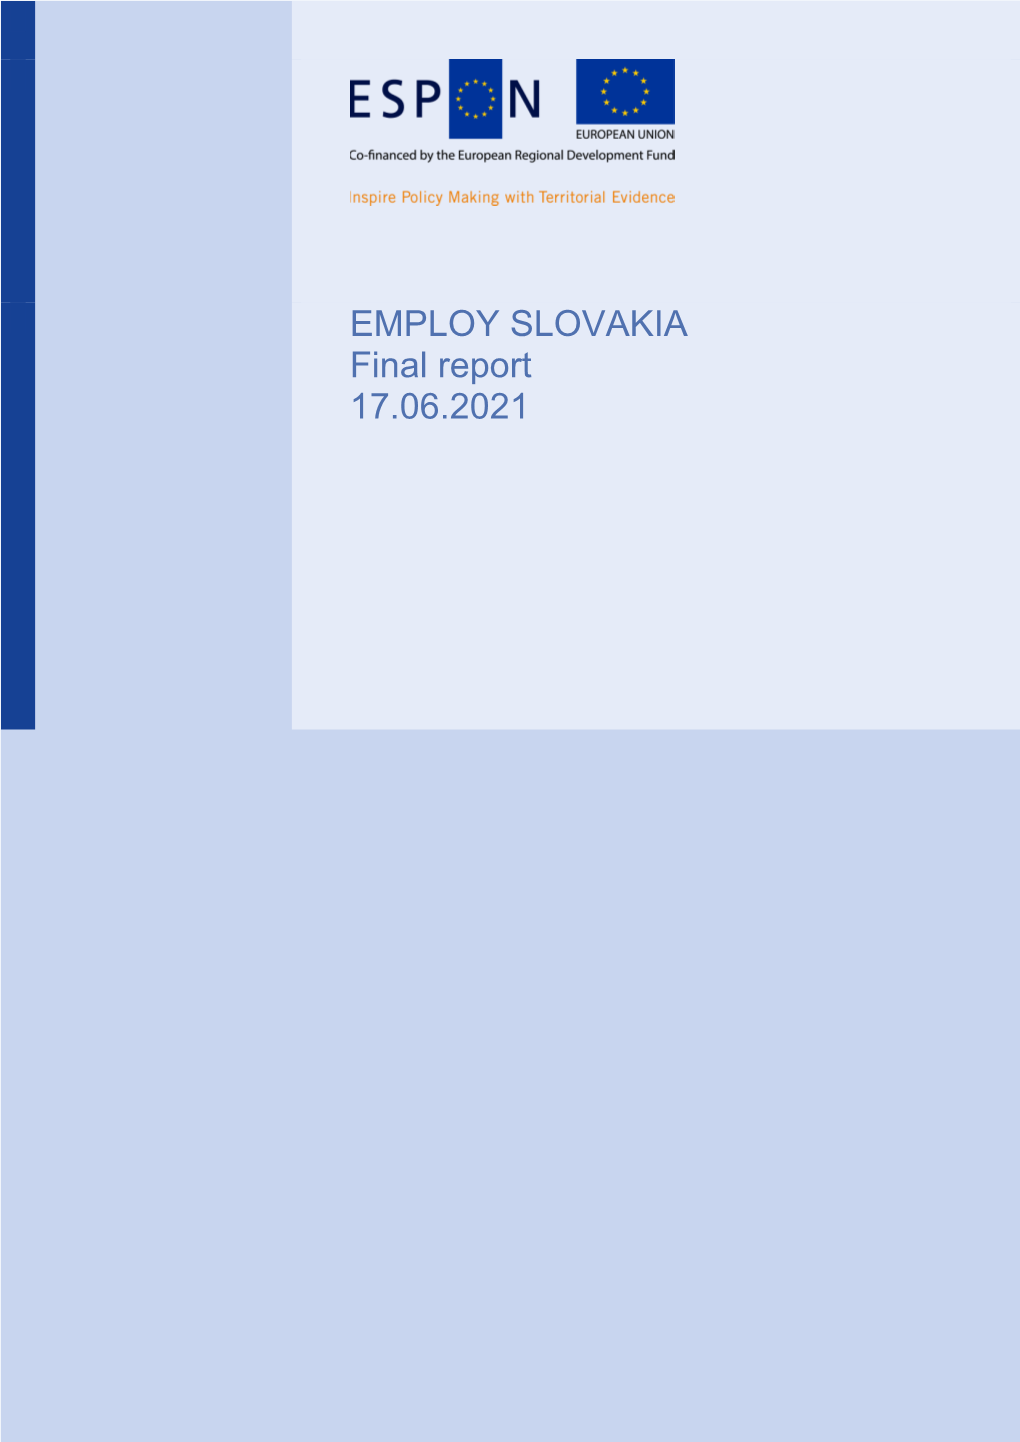 EMPLOY SLOVAKIA Final Report 17.06.2021